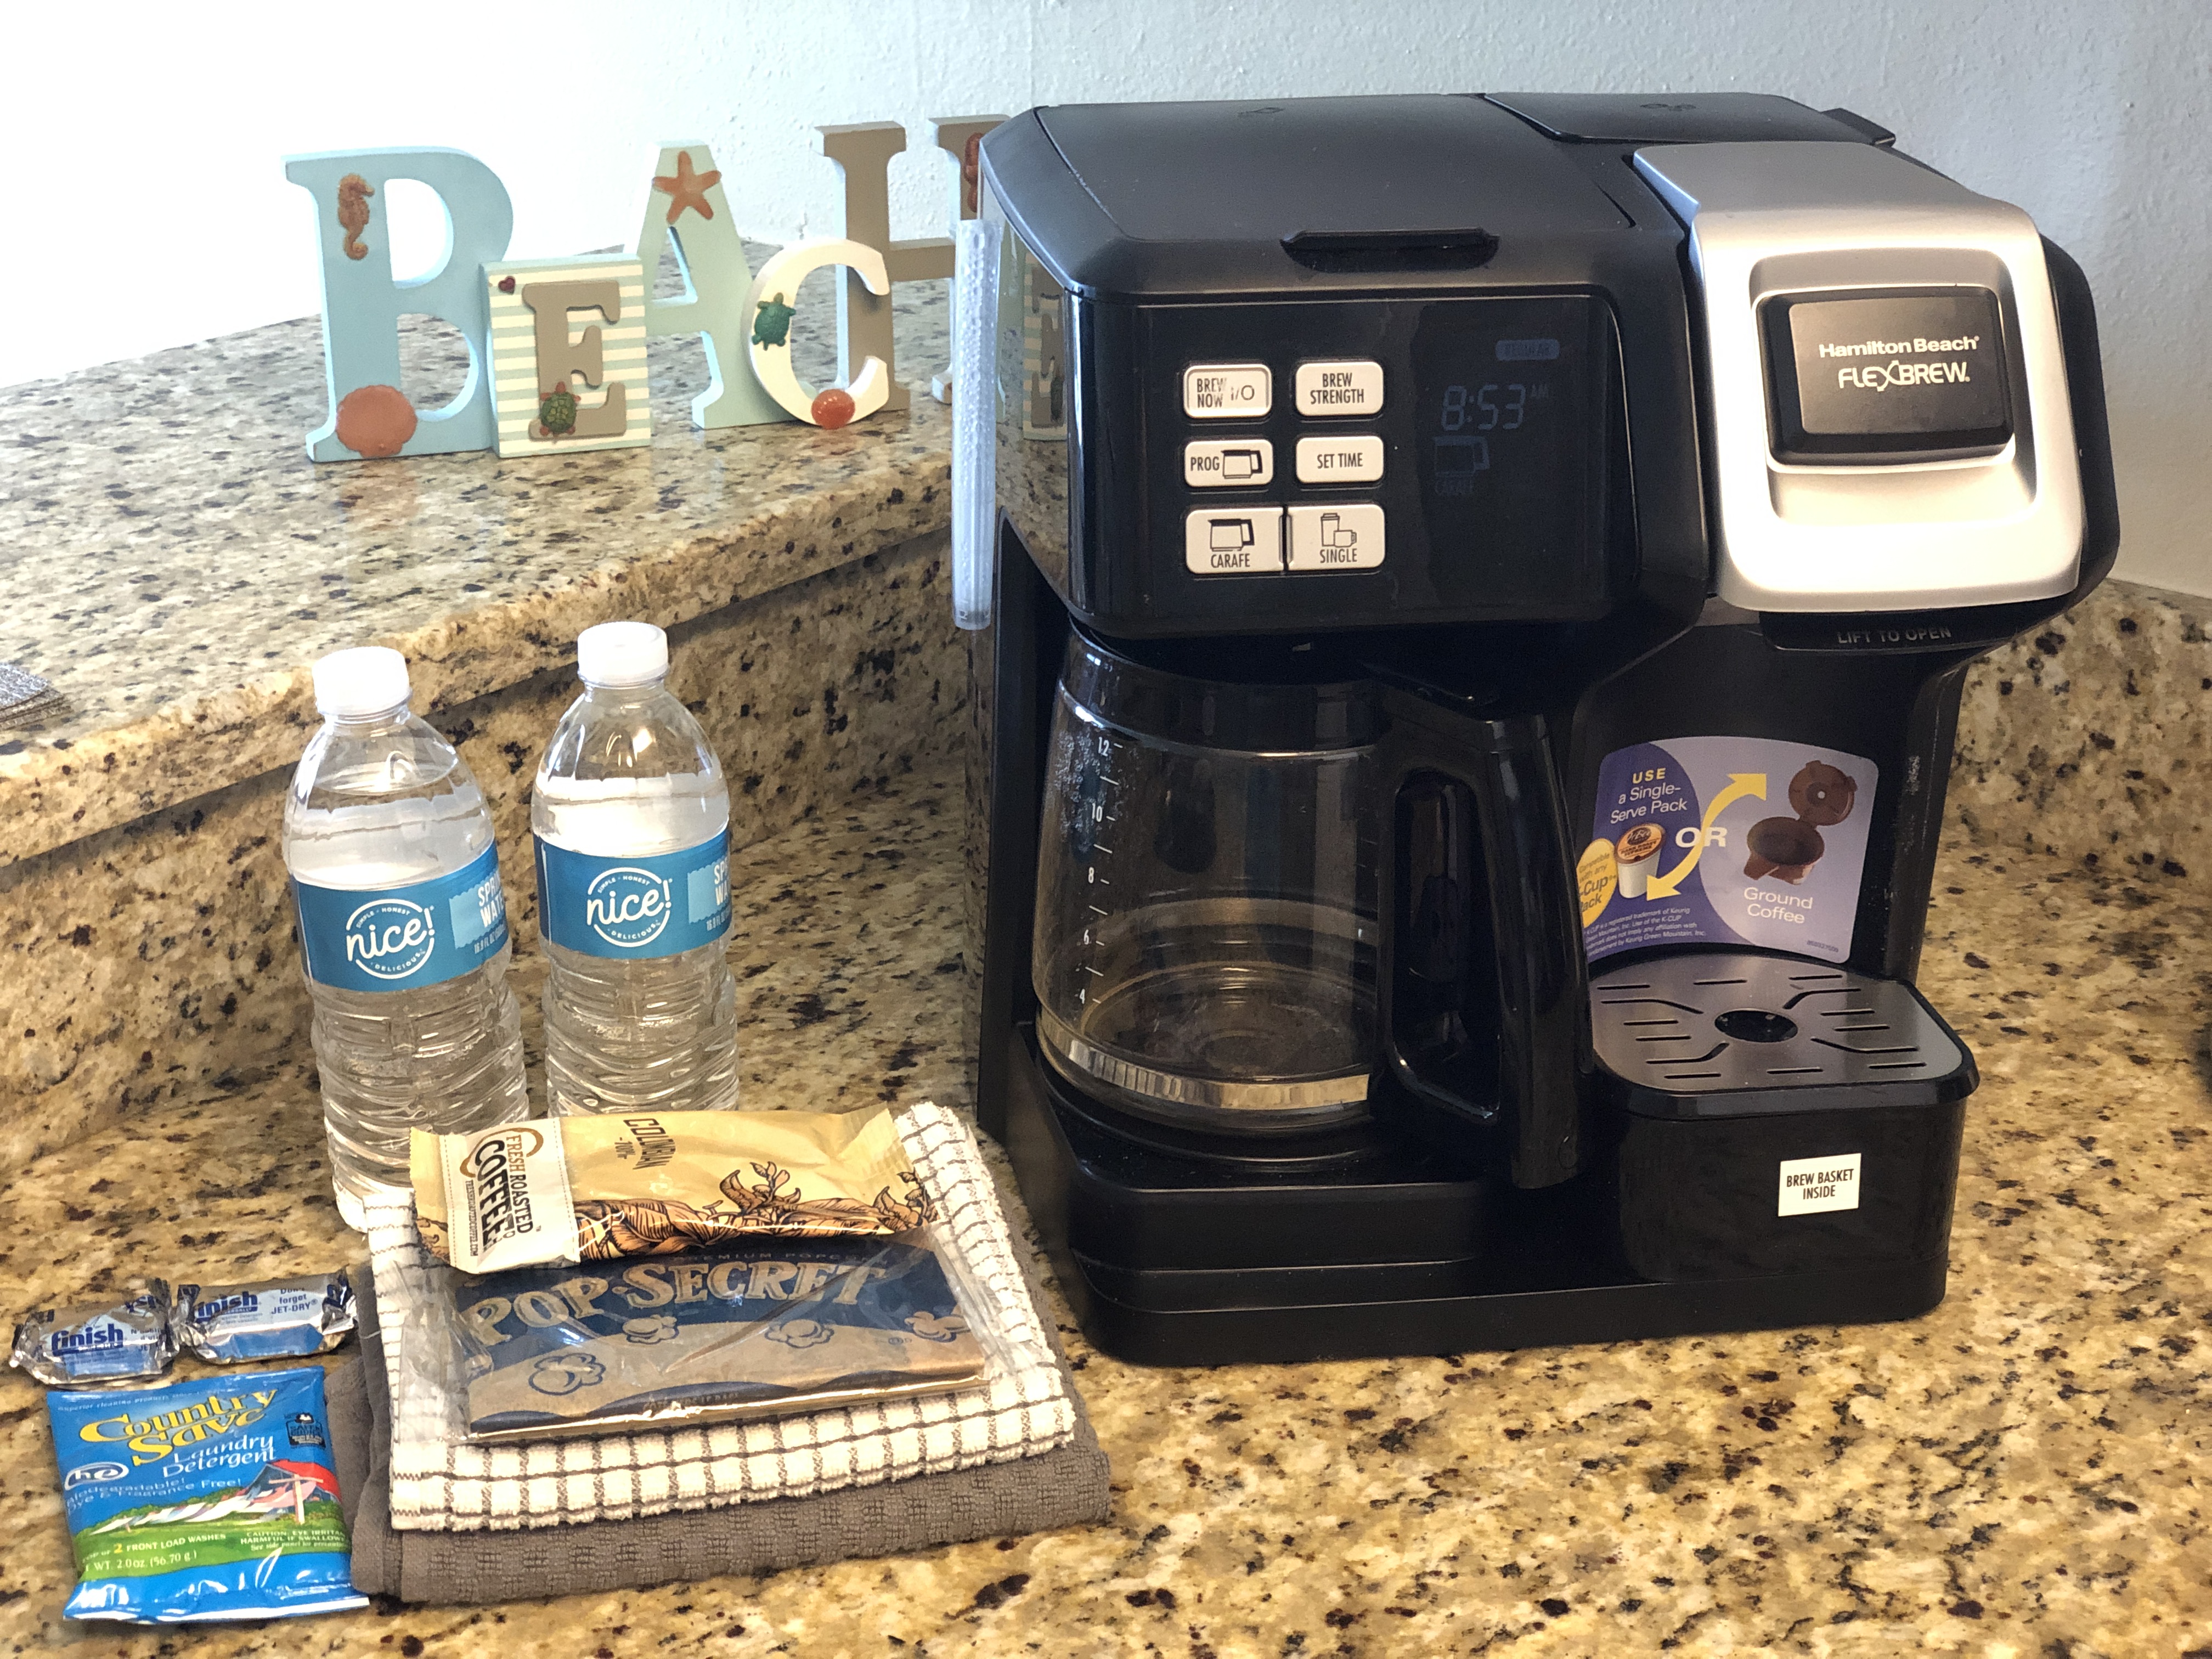 Coffee machine and start up supplies